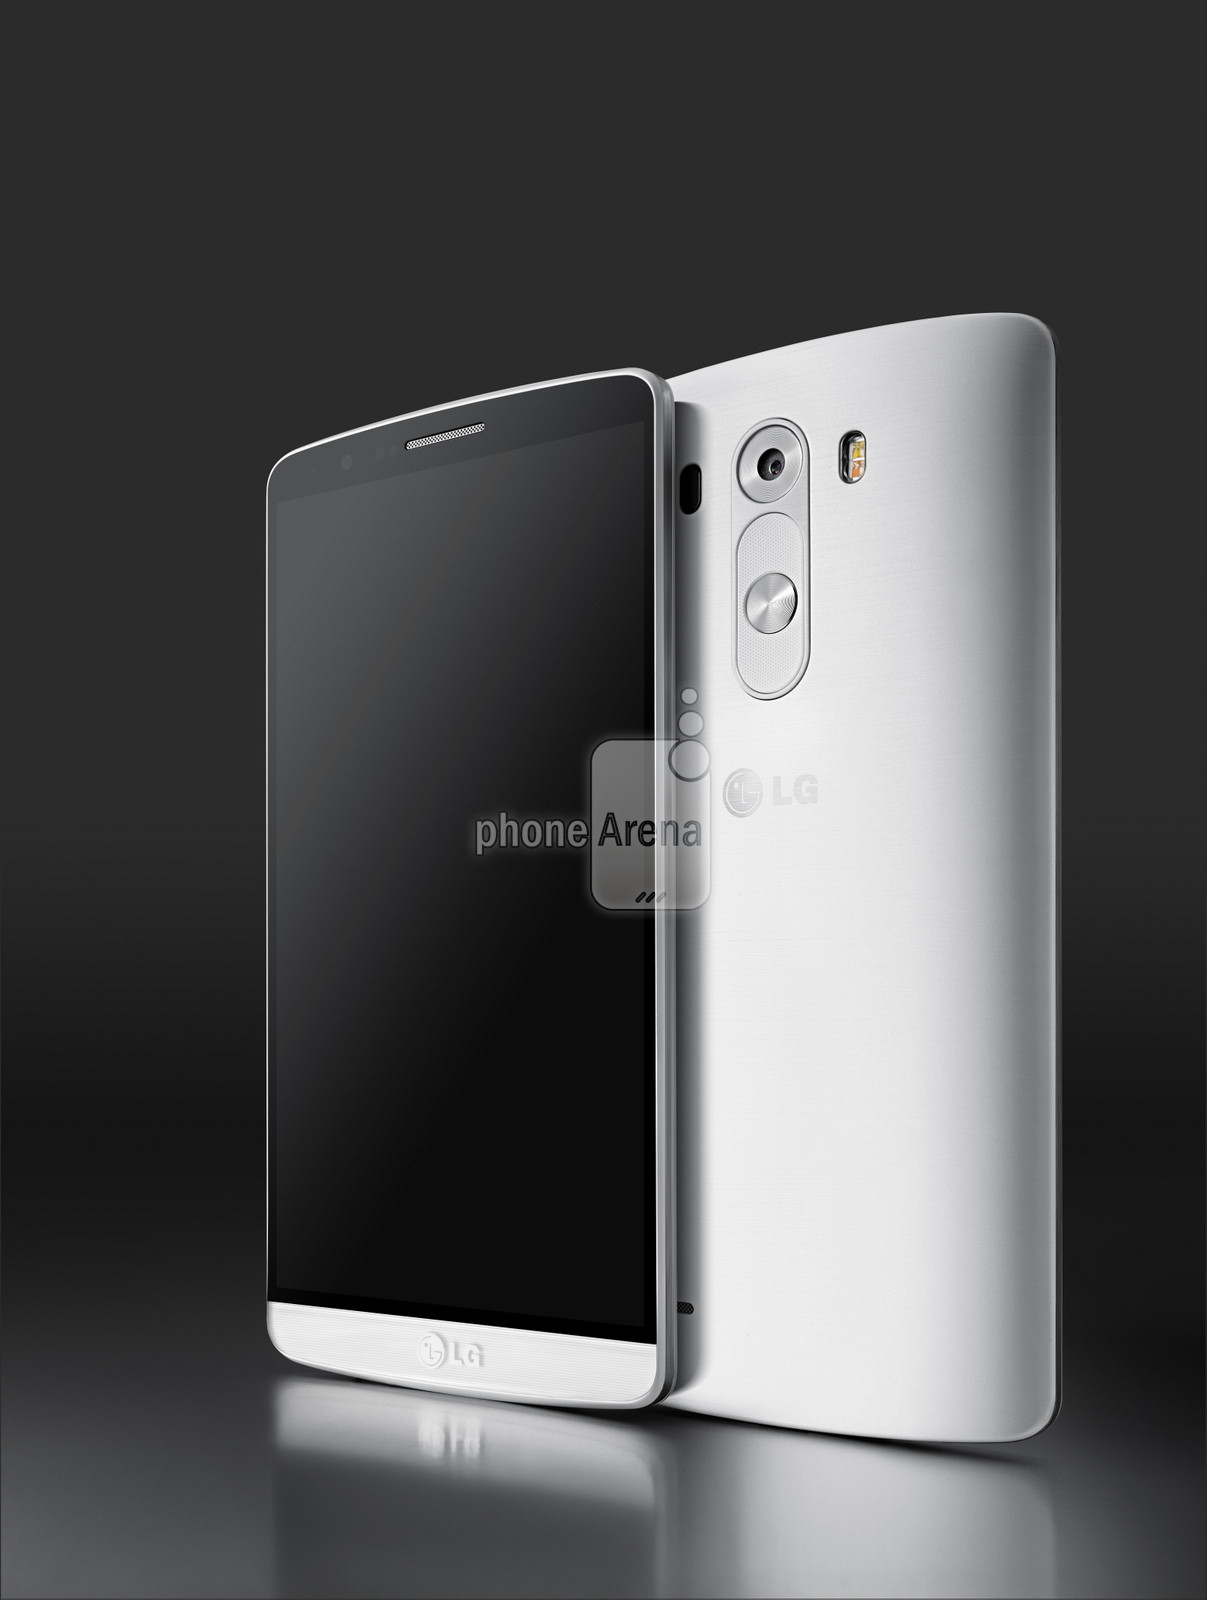 LG G3 press renders appear 2